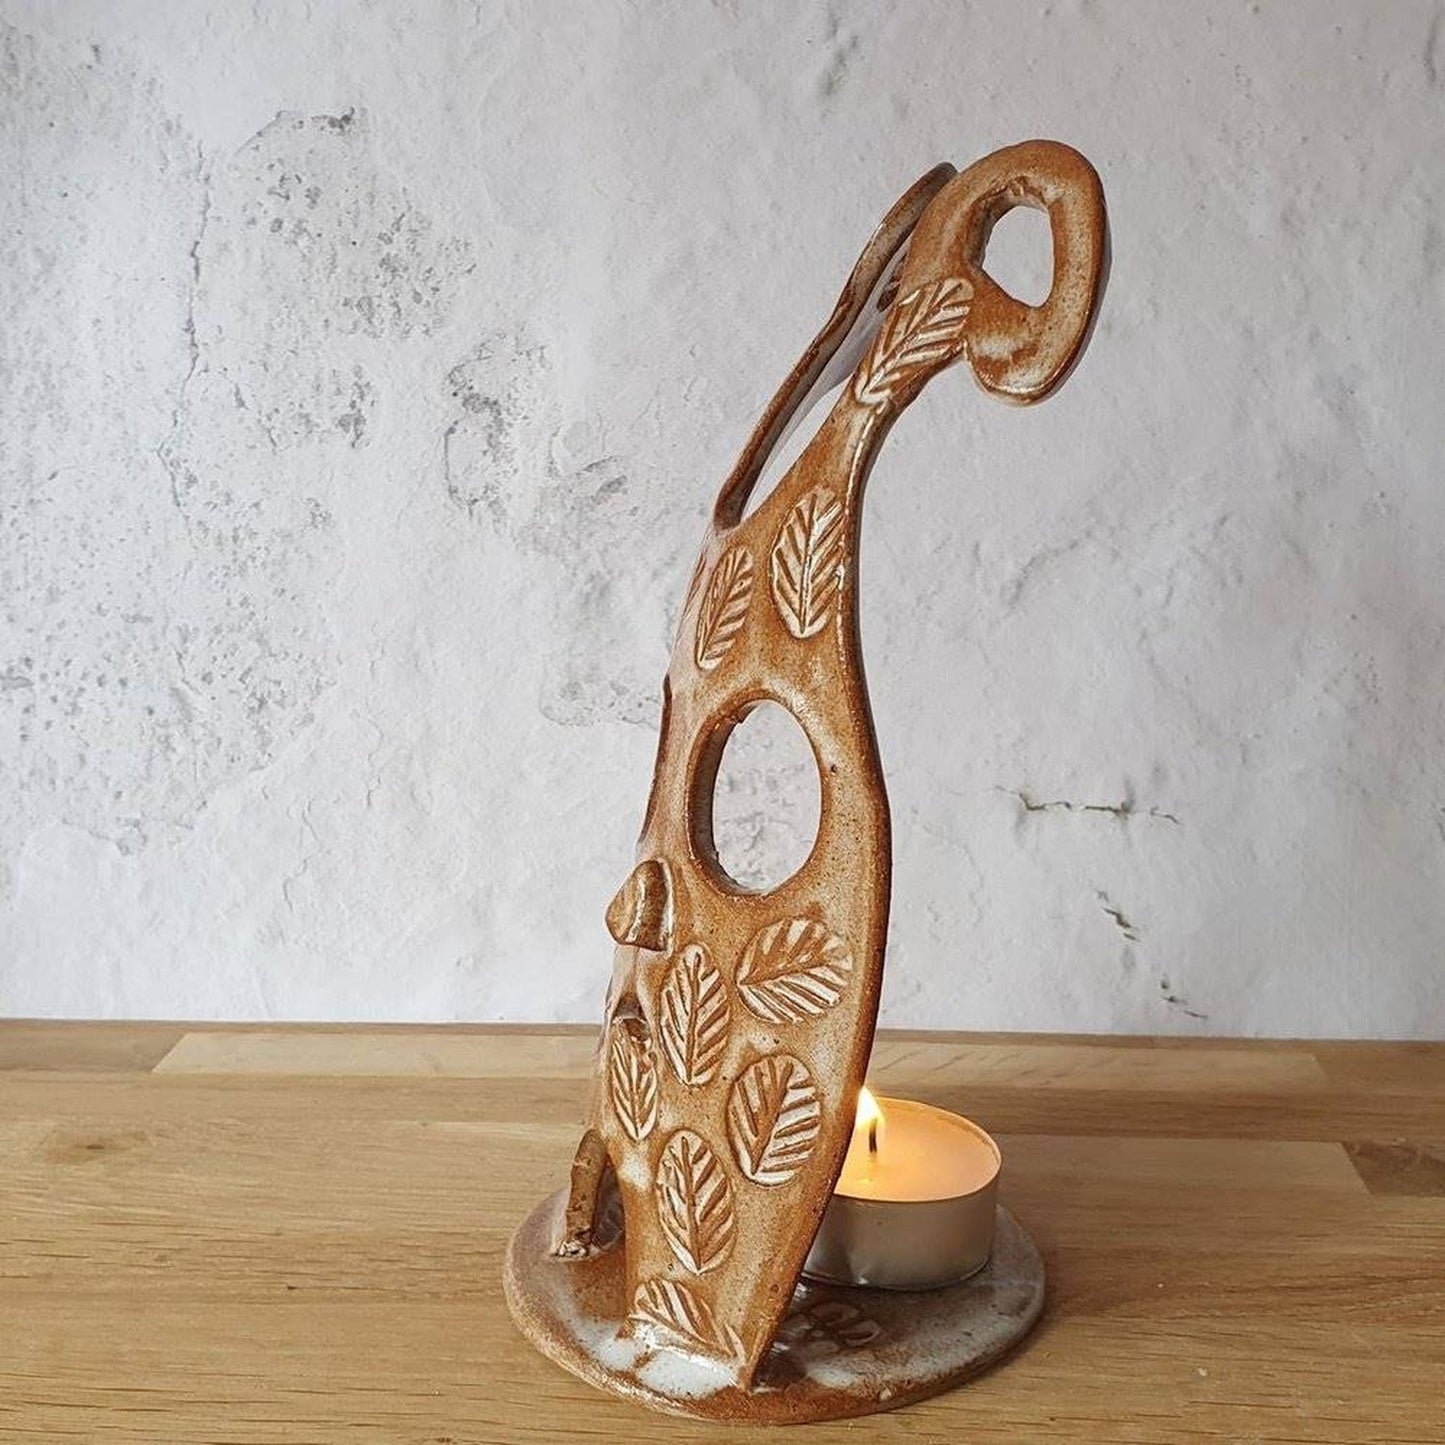 Ceramic forest creature sculpture ornament/ candle holder _image